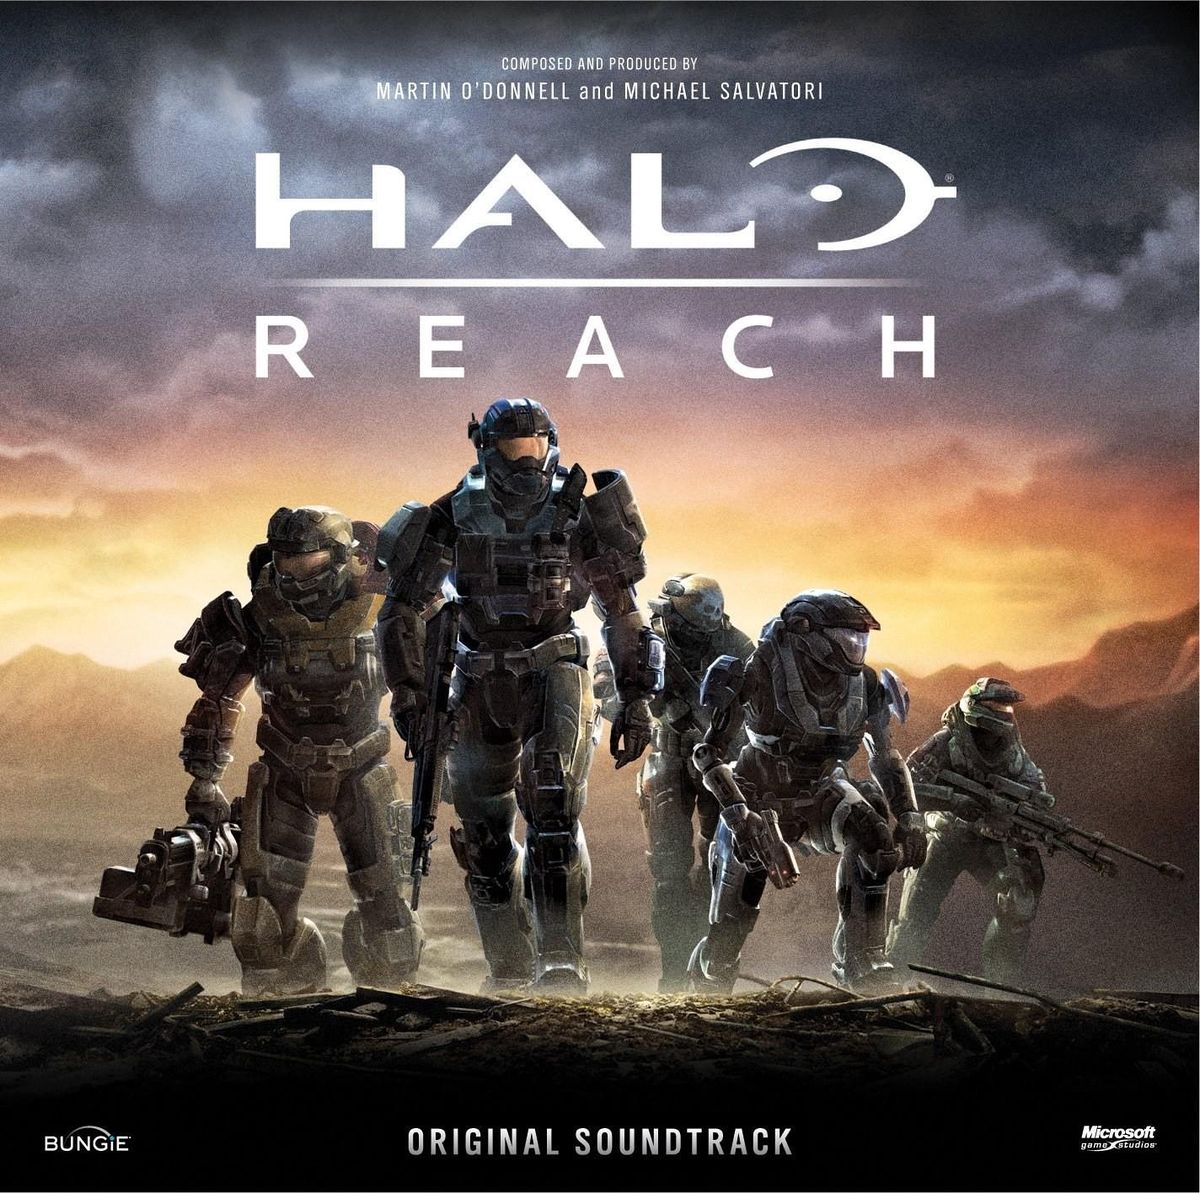 Halo Reach Original Soundtrack Music Halopedia, the Halo wiki